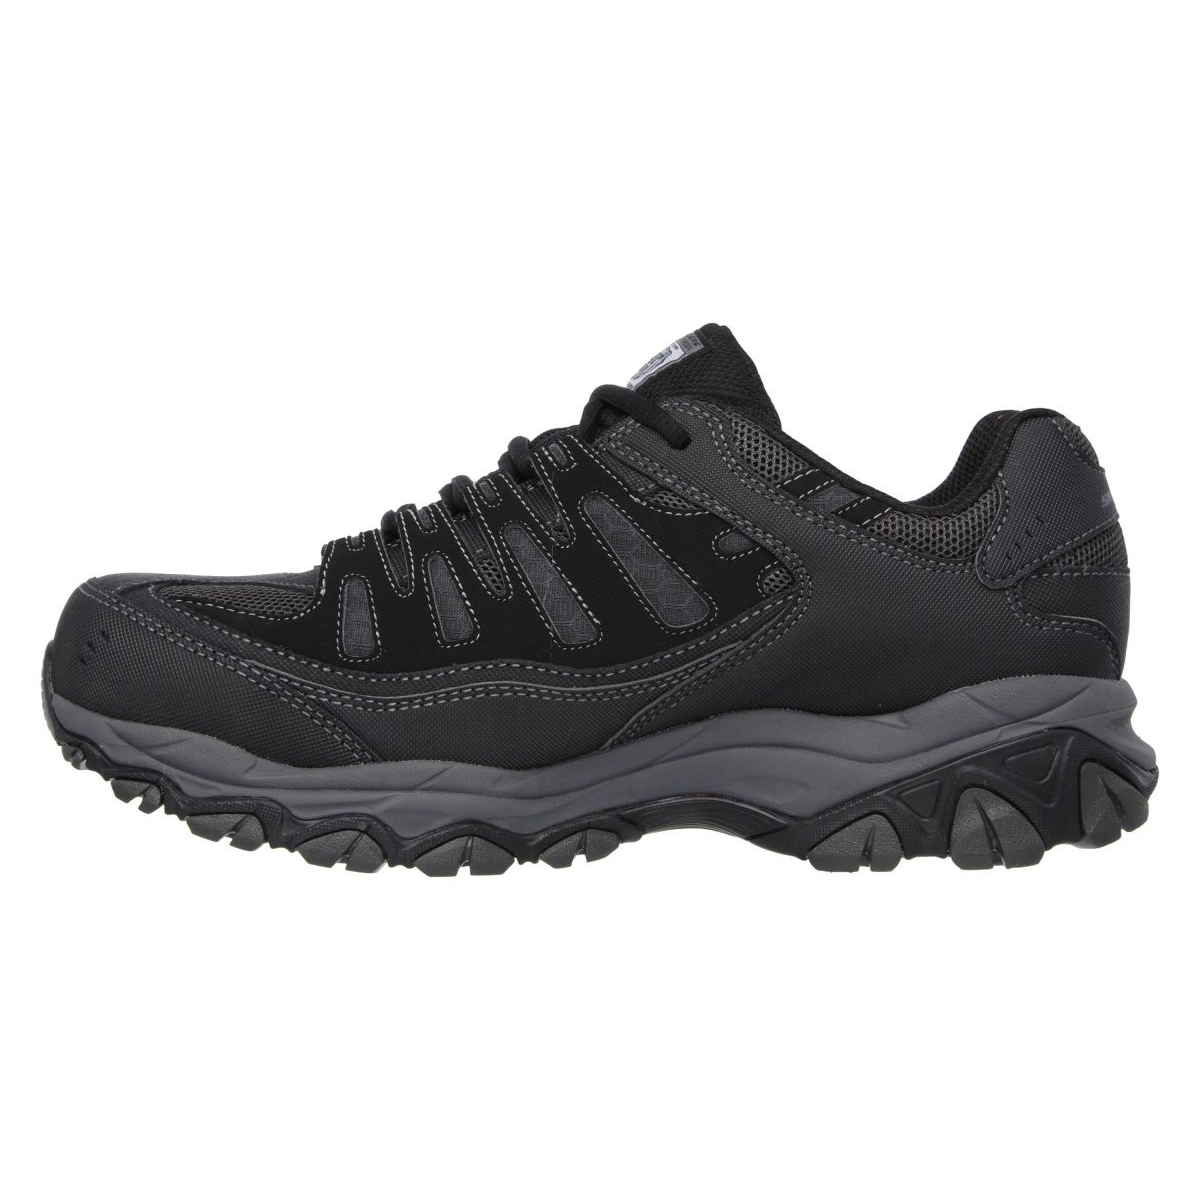 Skechers Men's Cankton-U Industrial Shoe 7 BLACK/CHARCOAL - BLACK/CHARCOAL, 8.5 Wide